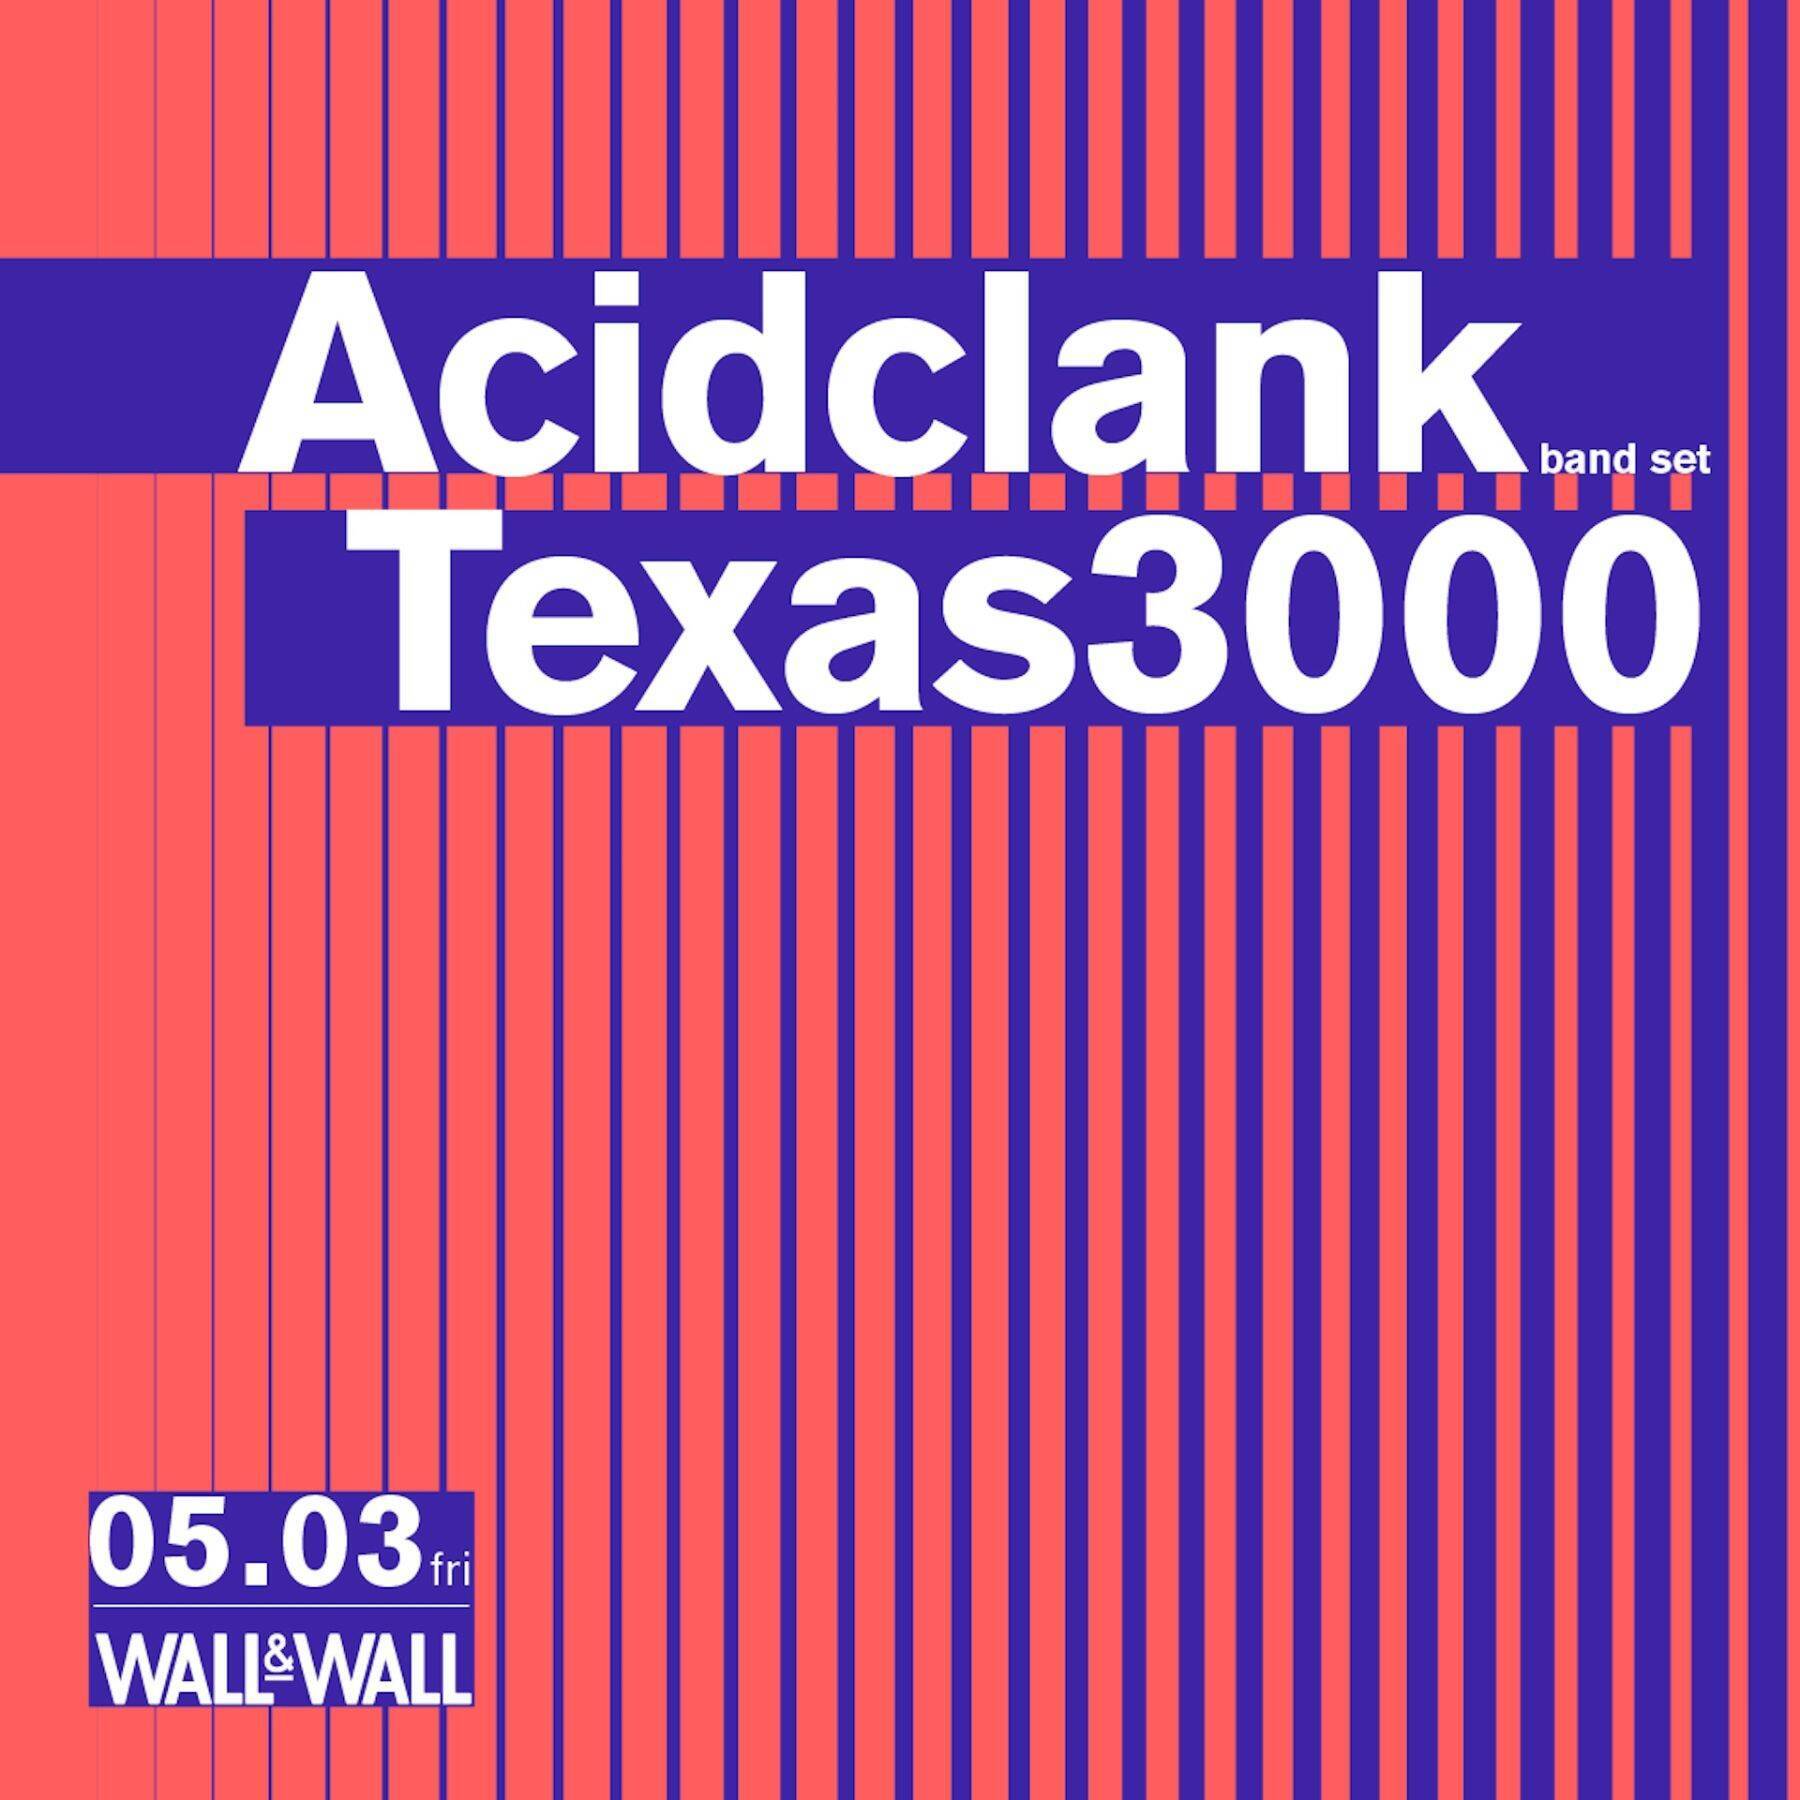 Acidclank（BAND SET）とTexas 3000が表参道・WALL&WALLで共演